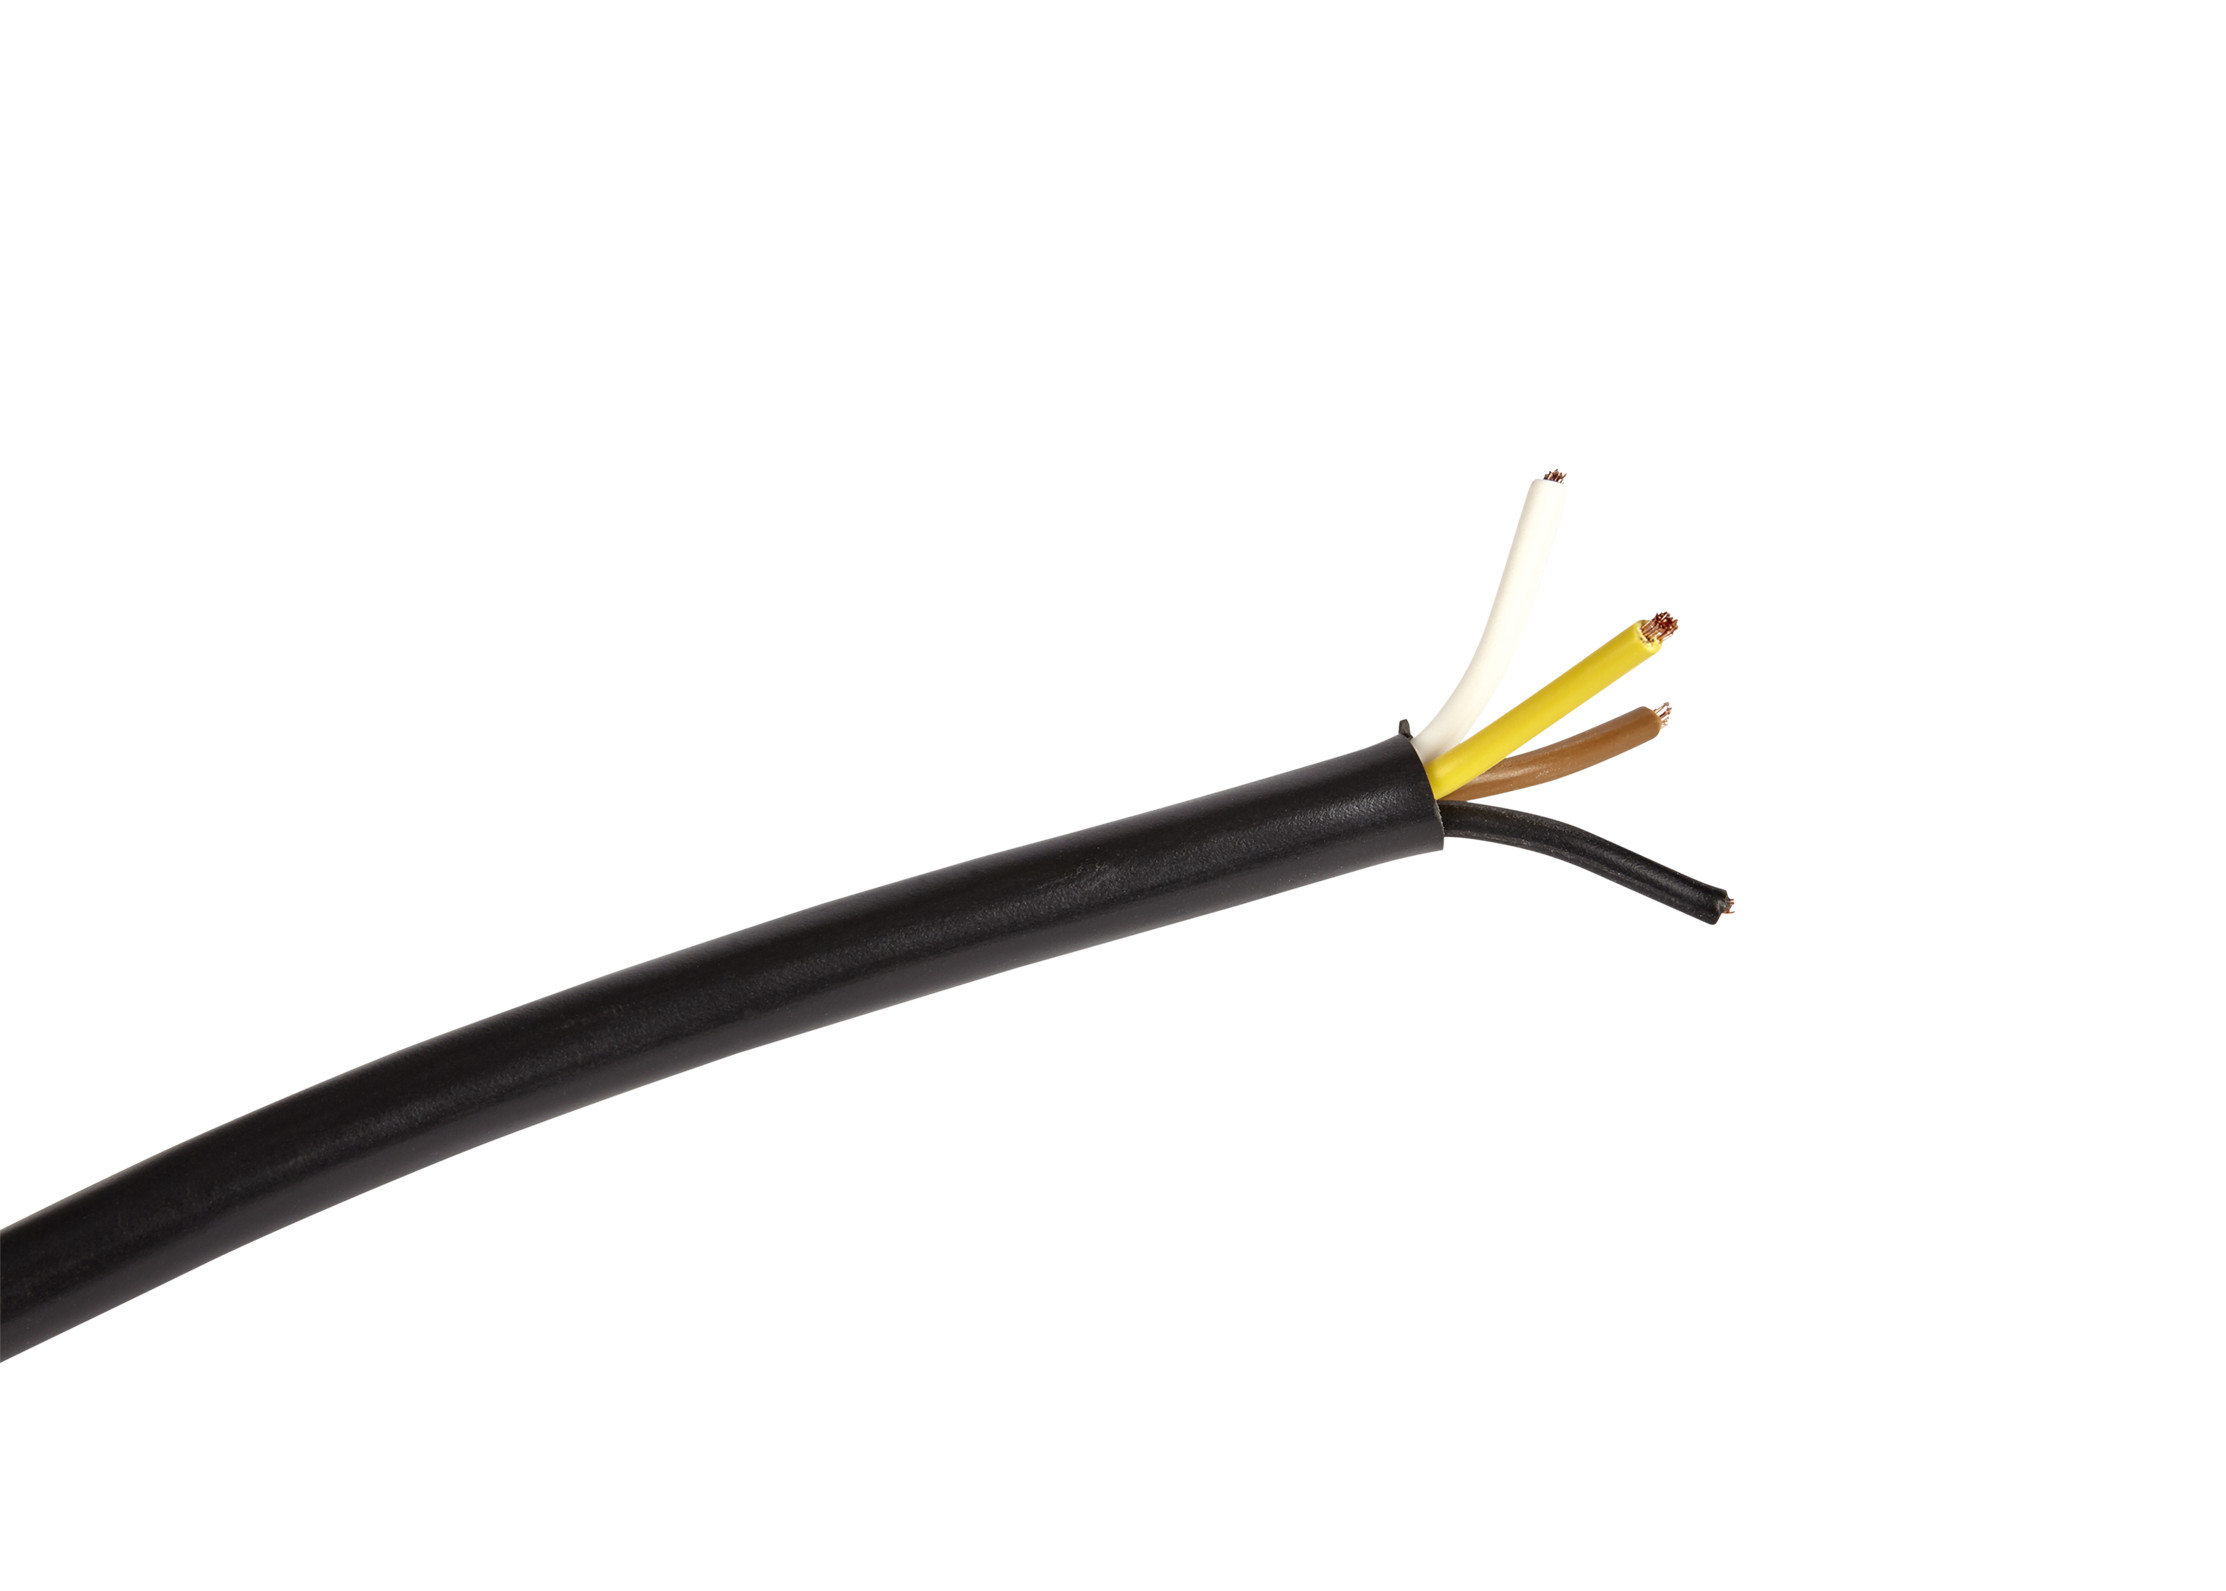 Kabel - 4x1.5mm² - 50m - bruin/wit/geel/zwart